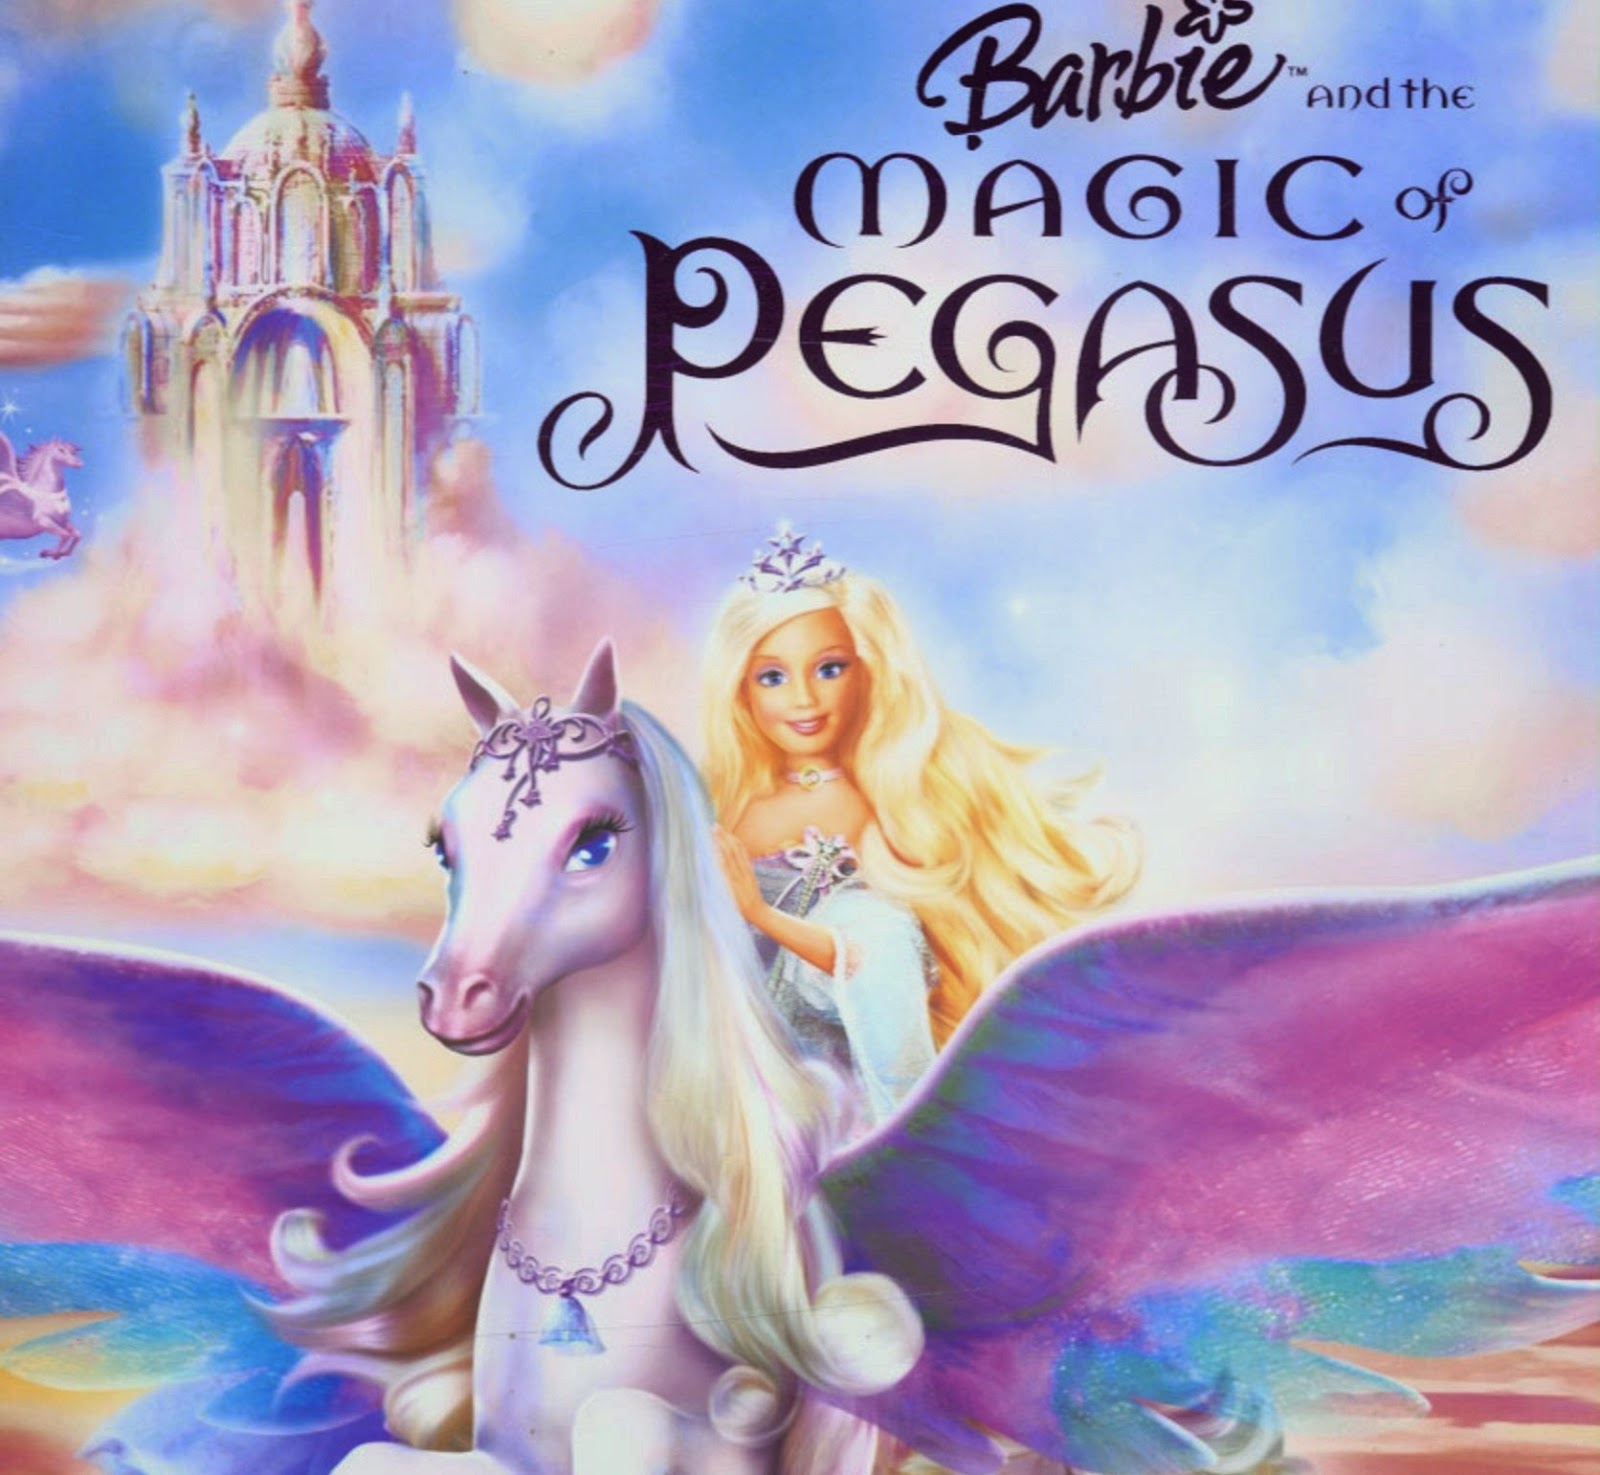 Barbie and the Magic of Pegasus (2005) Movie Online